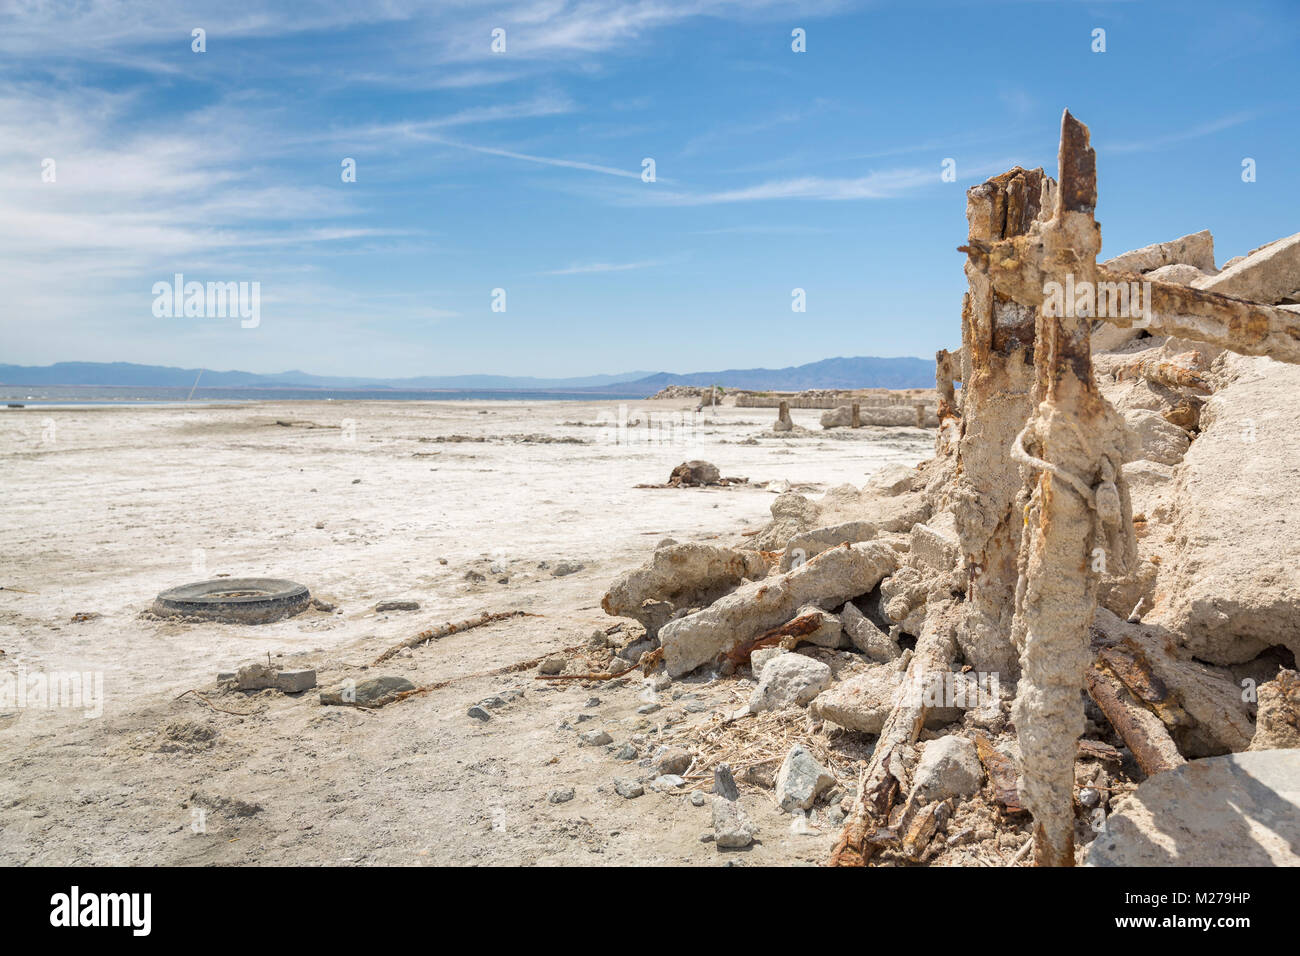 Abandoned Debris at Bomby Beach, The Salton Sea, California Stock Photo